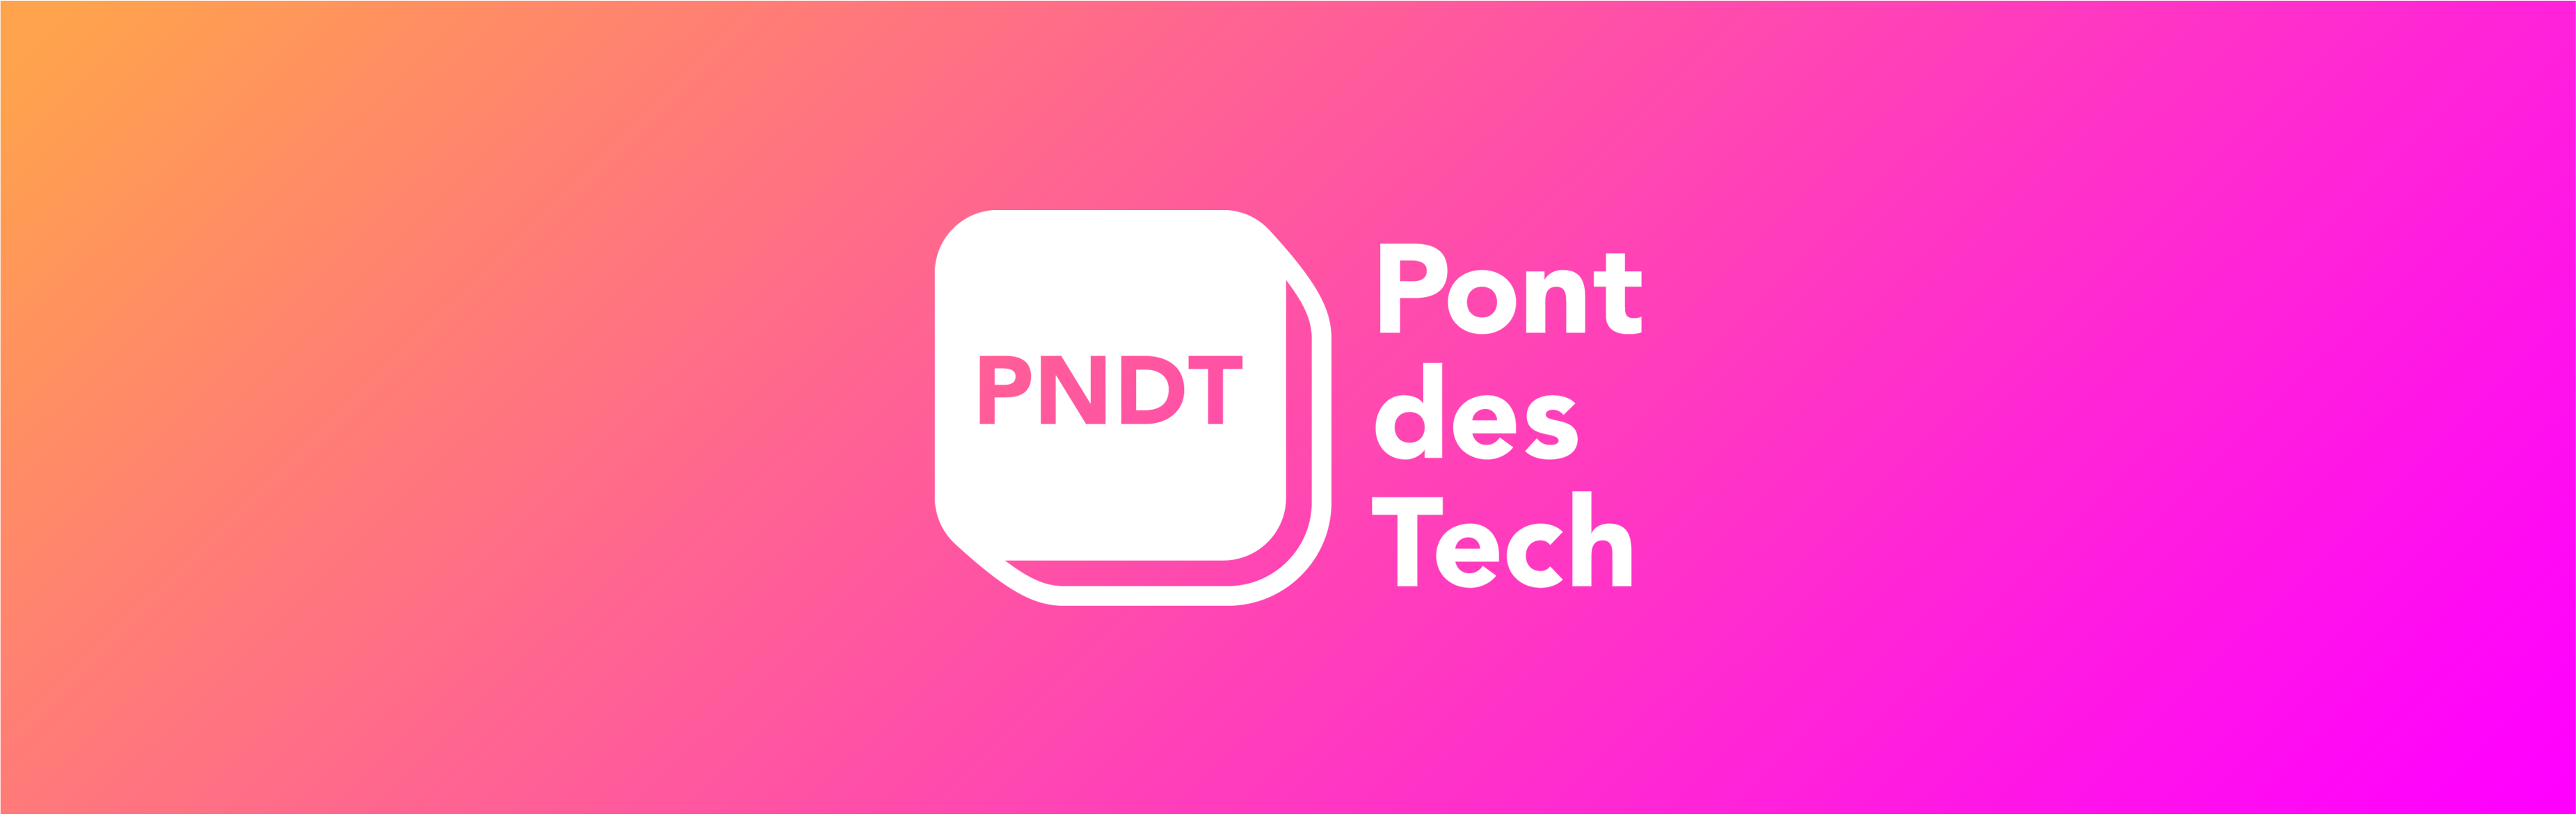 Pont des Techトップ画像